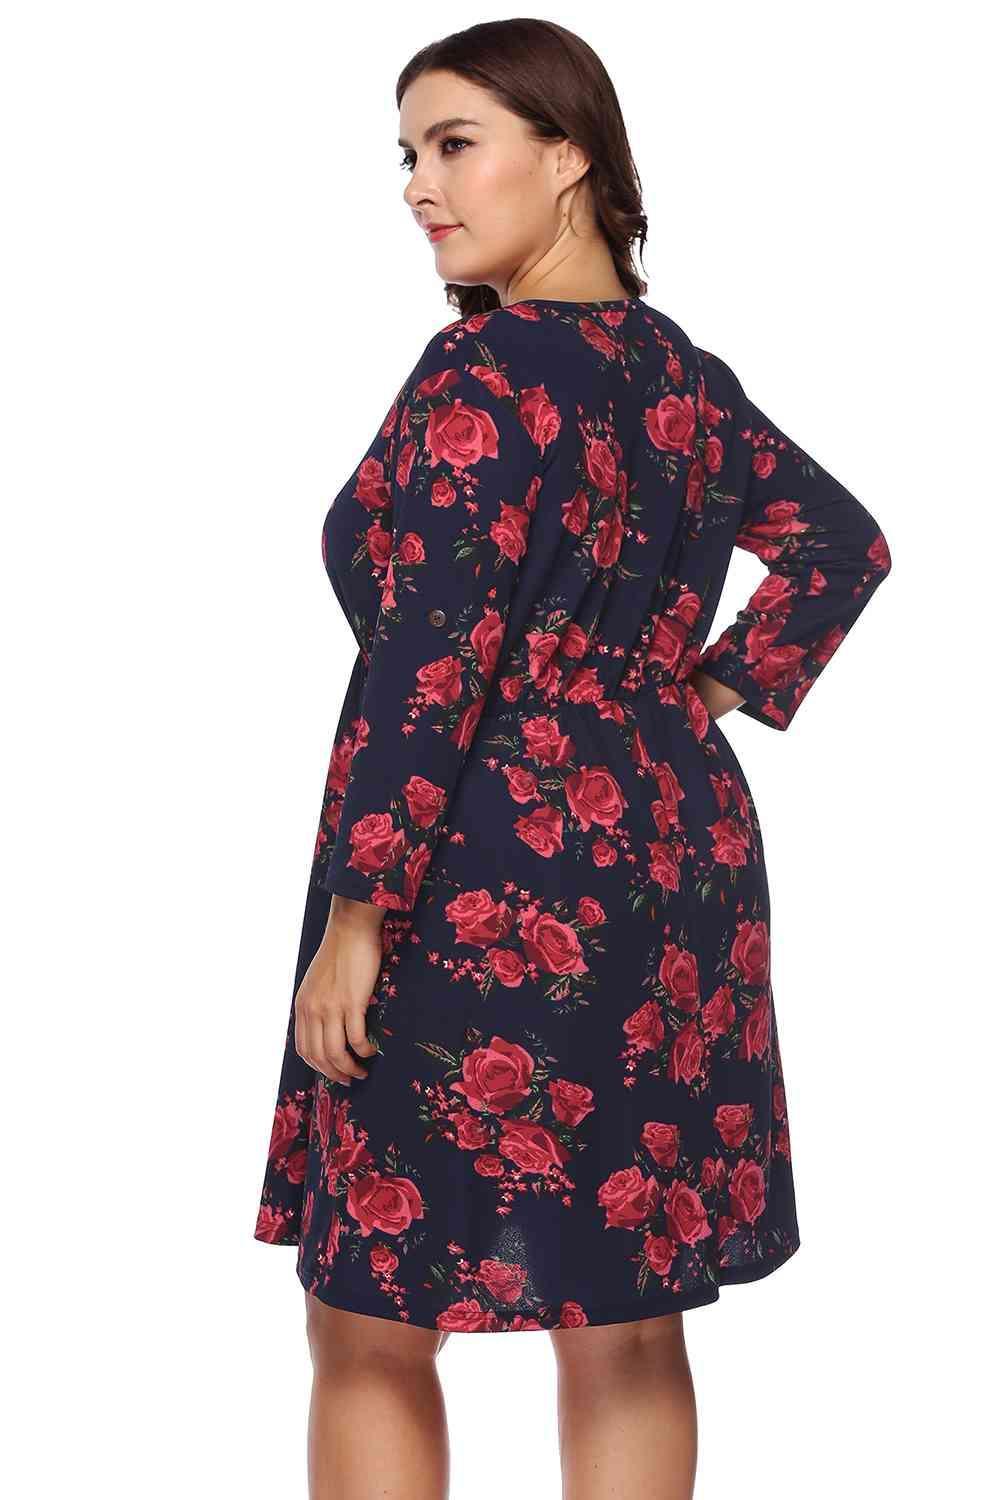 Roll Tab Sleeve Plus Size Floral Print Dress - MXSTUDIO.COM